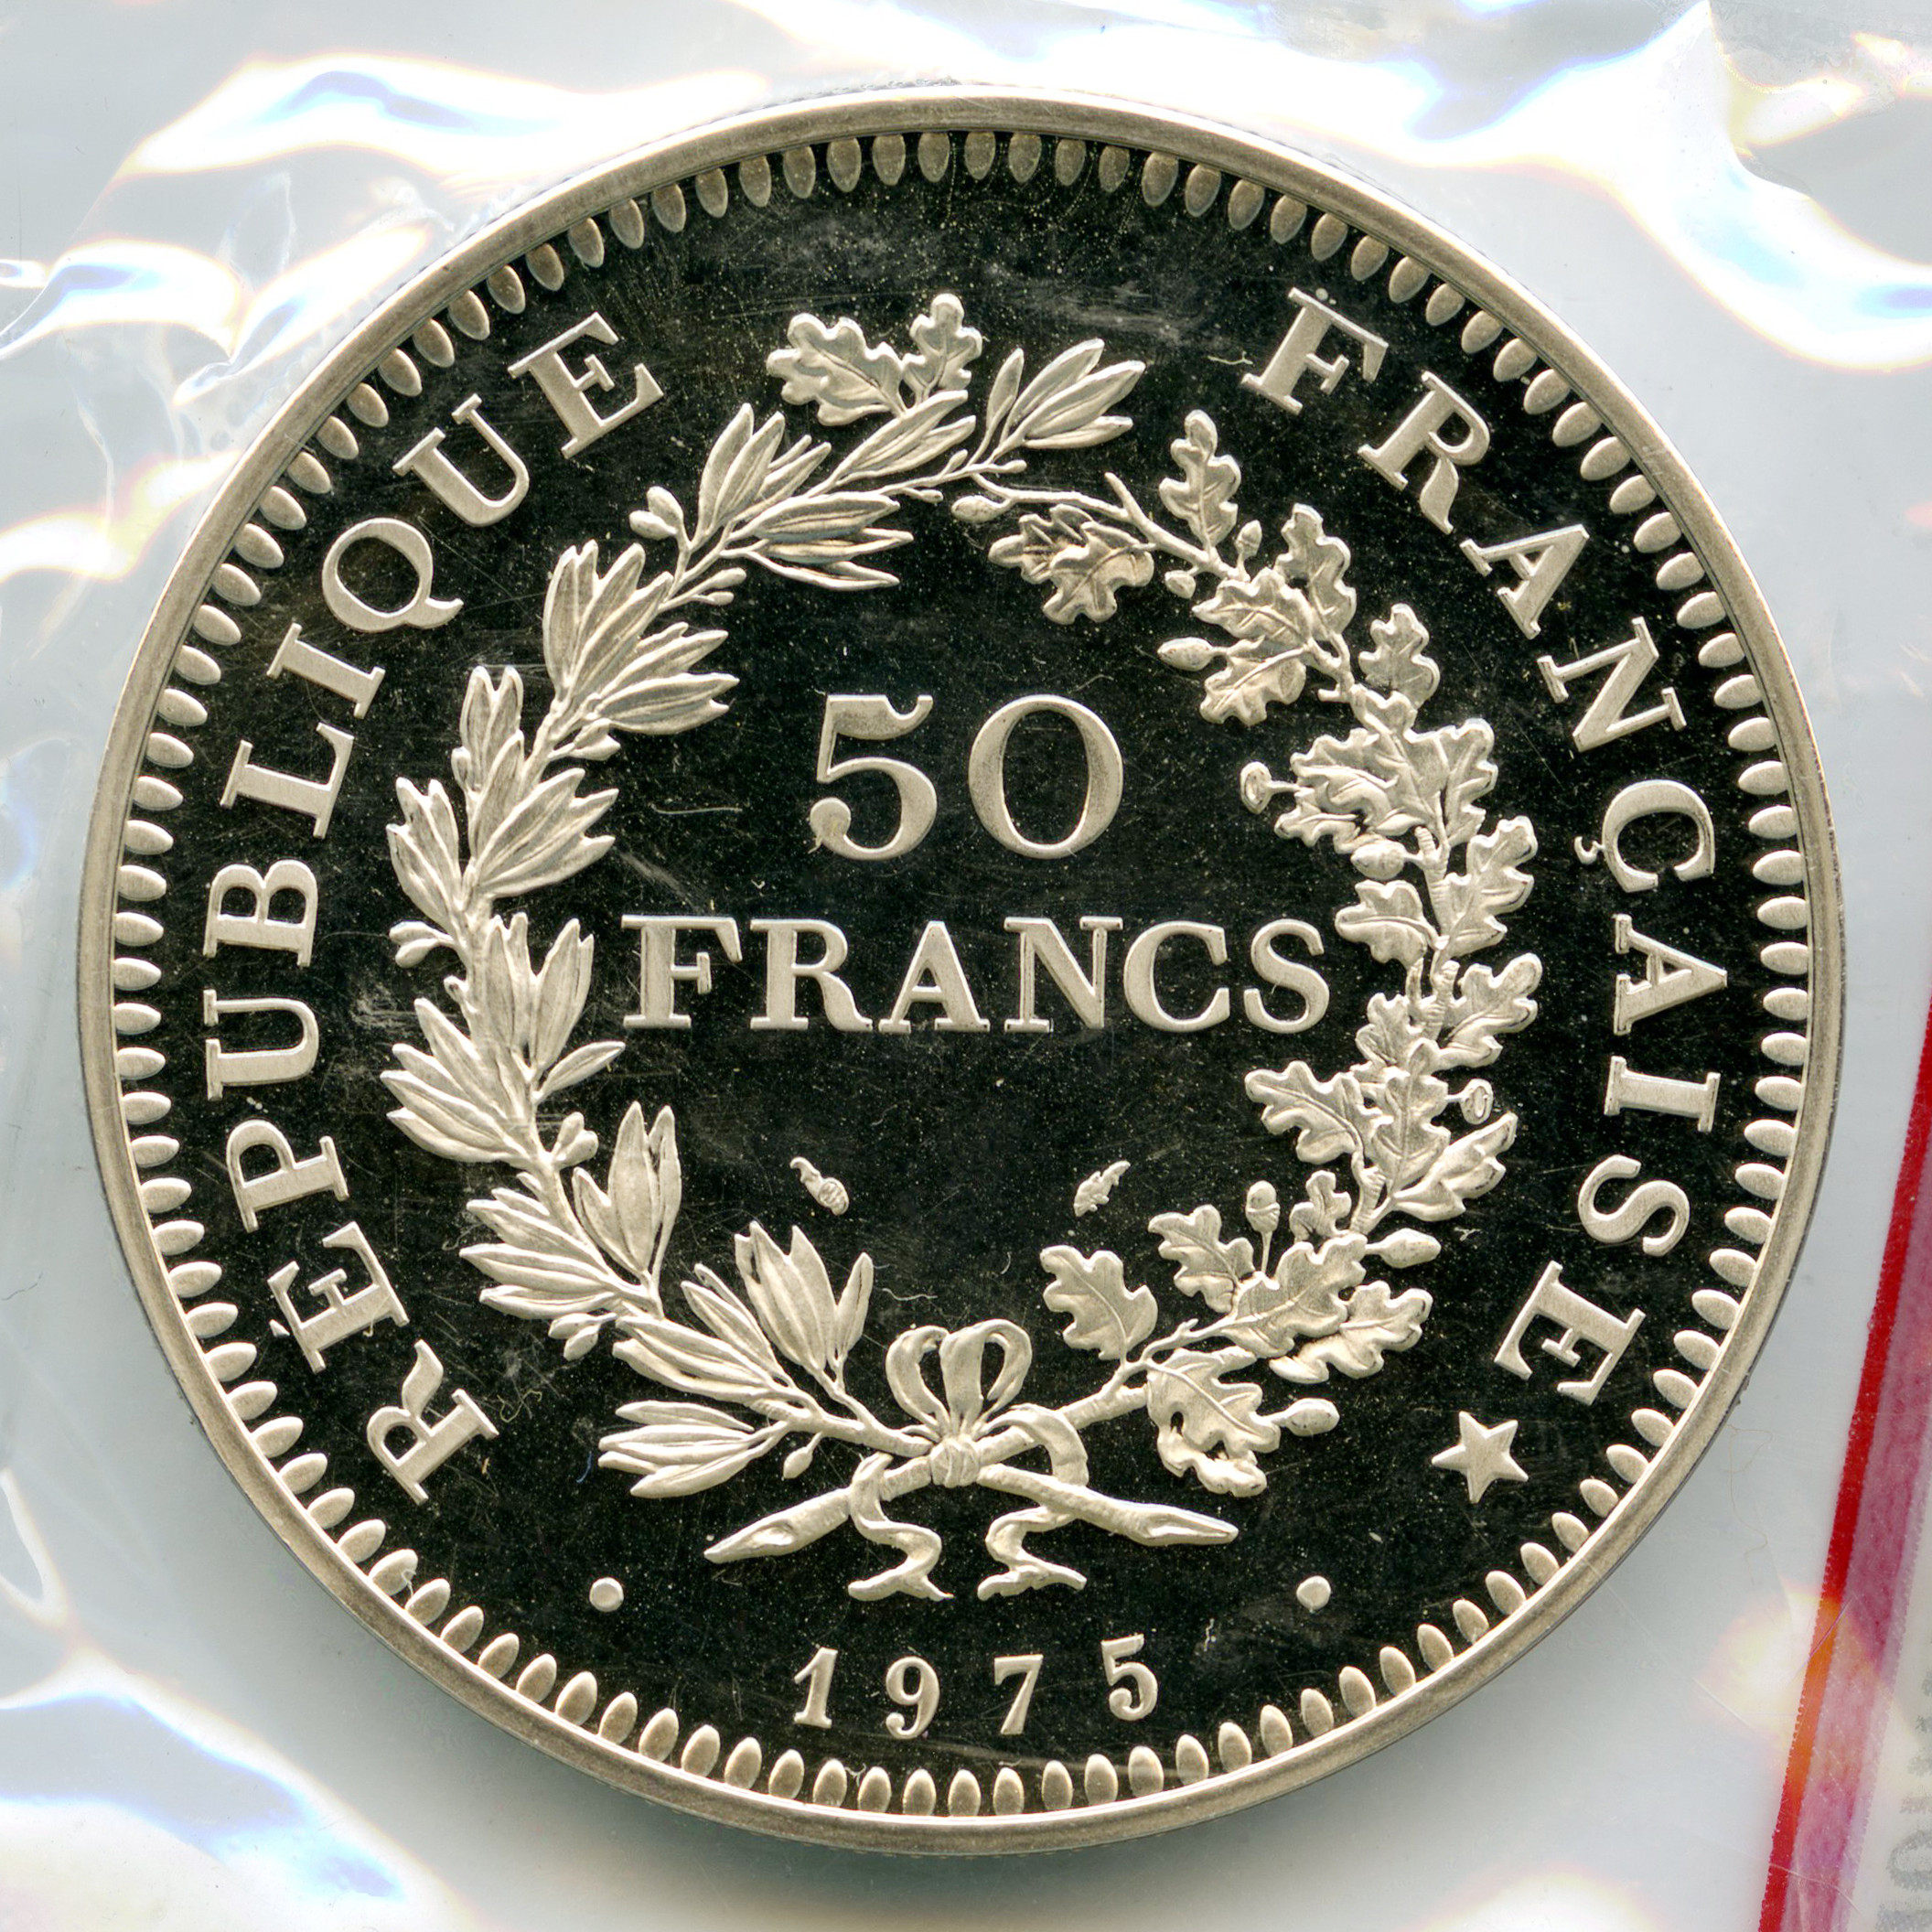 50 Francs - Piéfort - 1975 revers